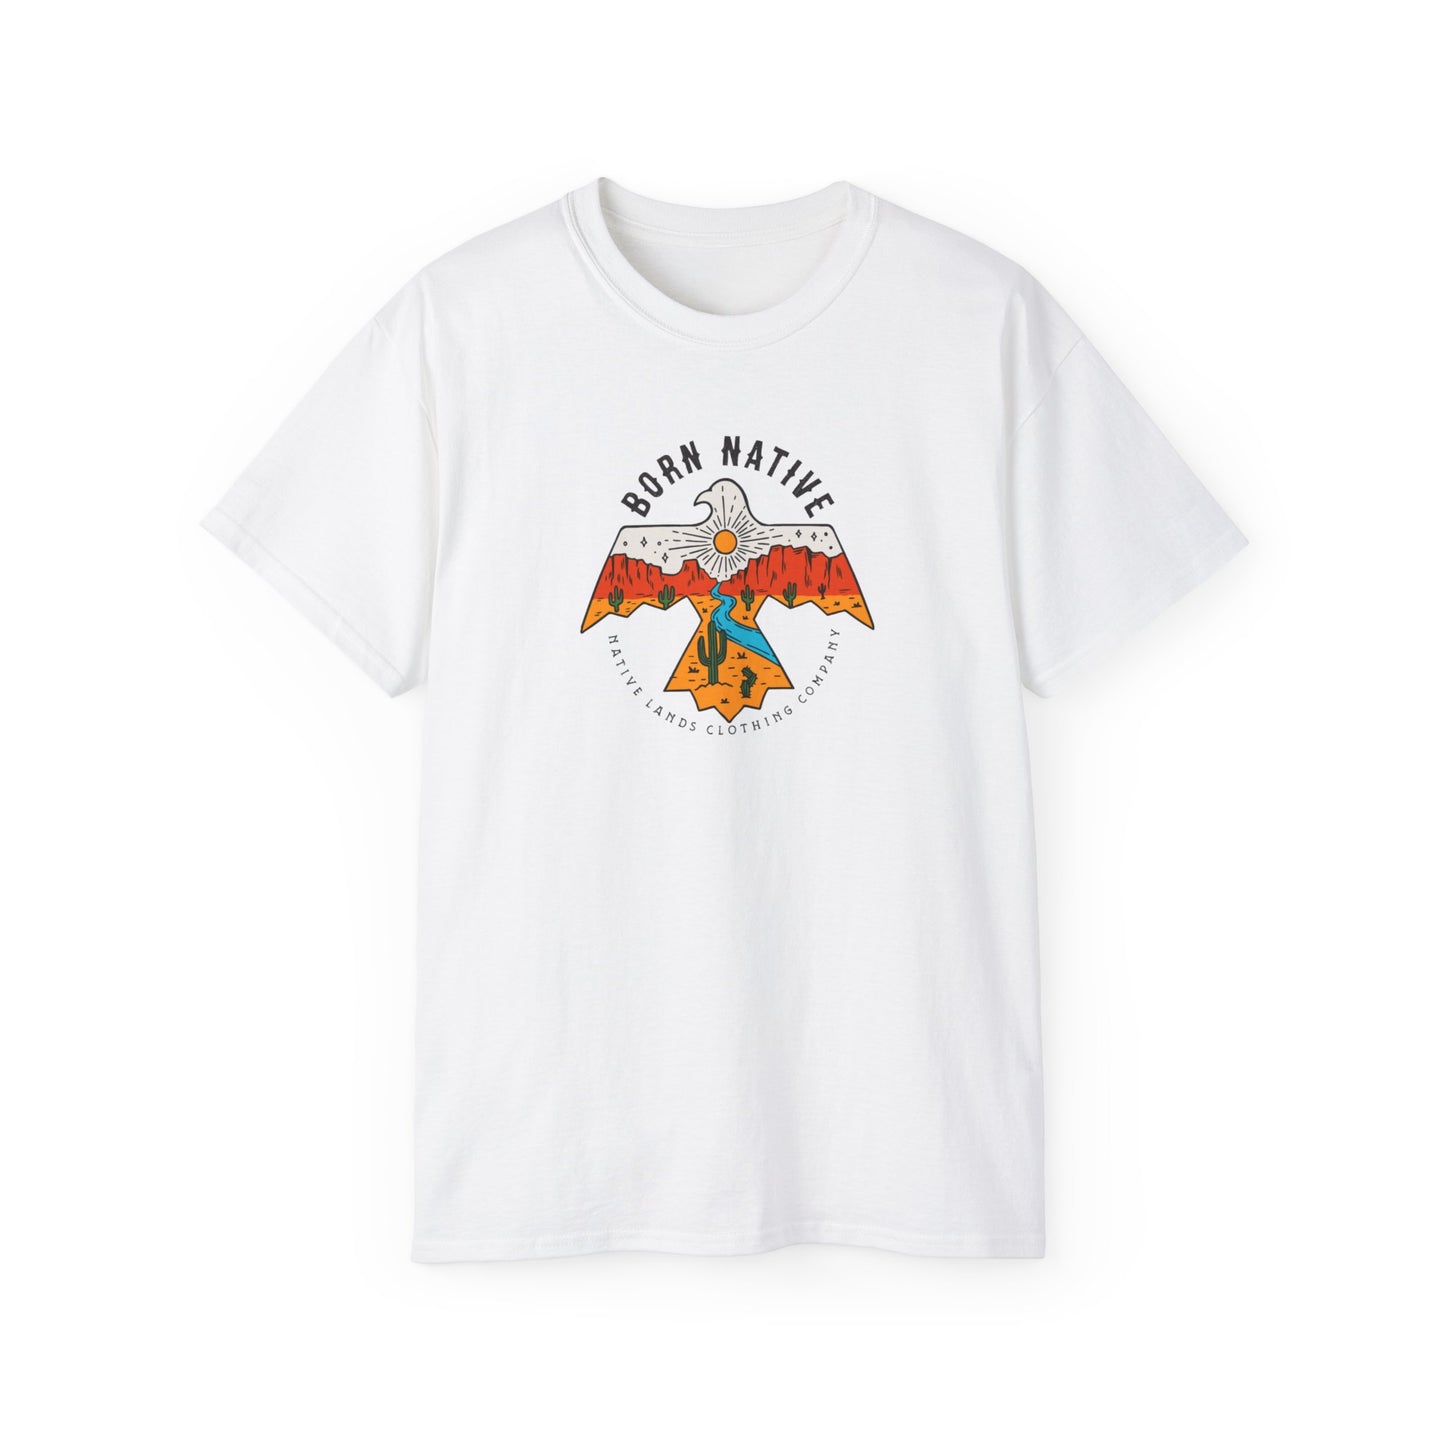 Born Native Shirt Thunderbird Native American